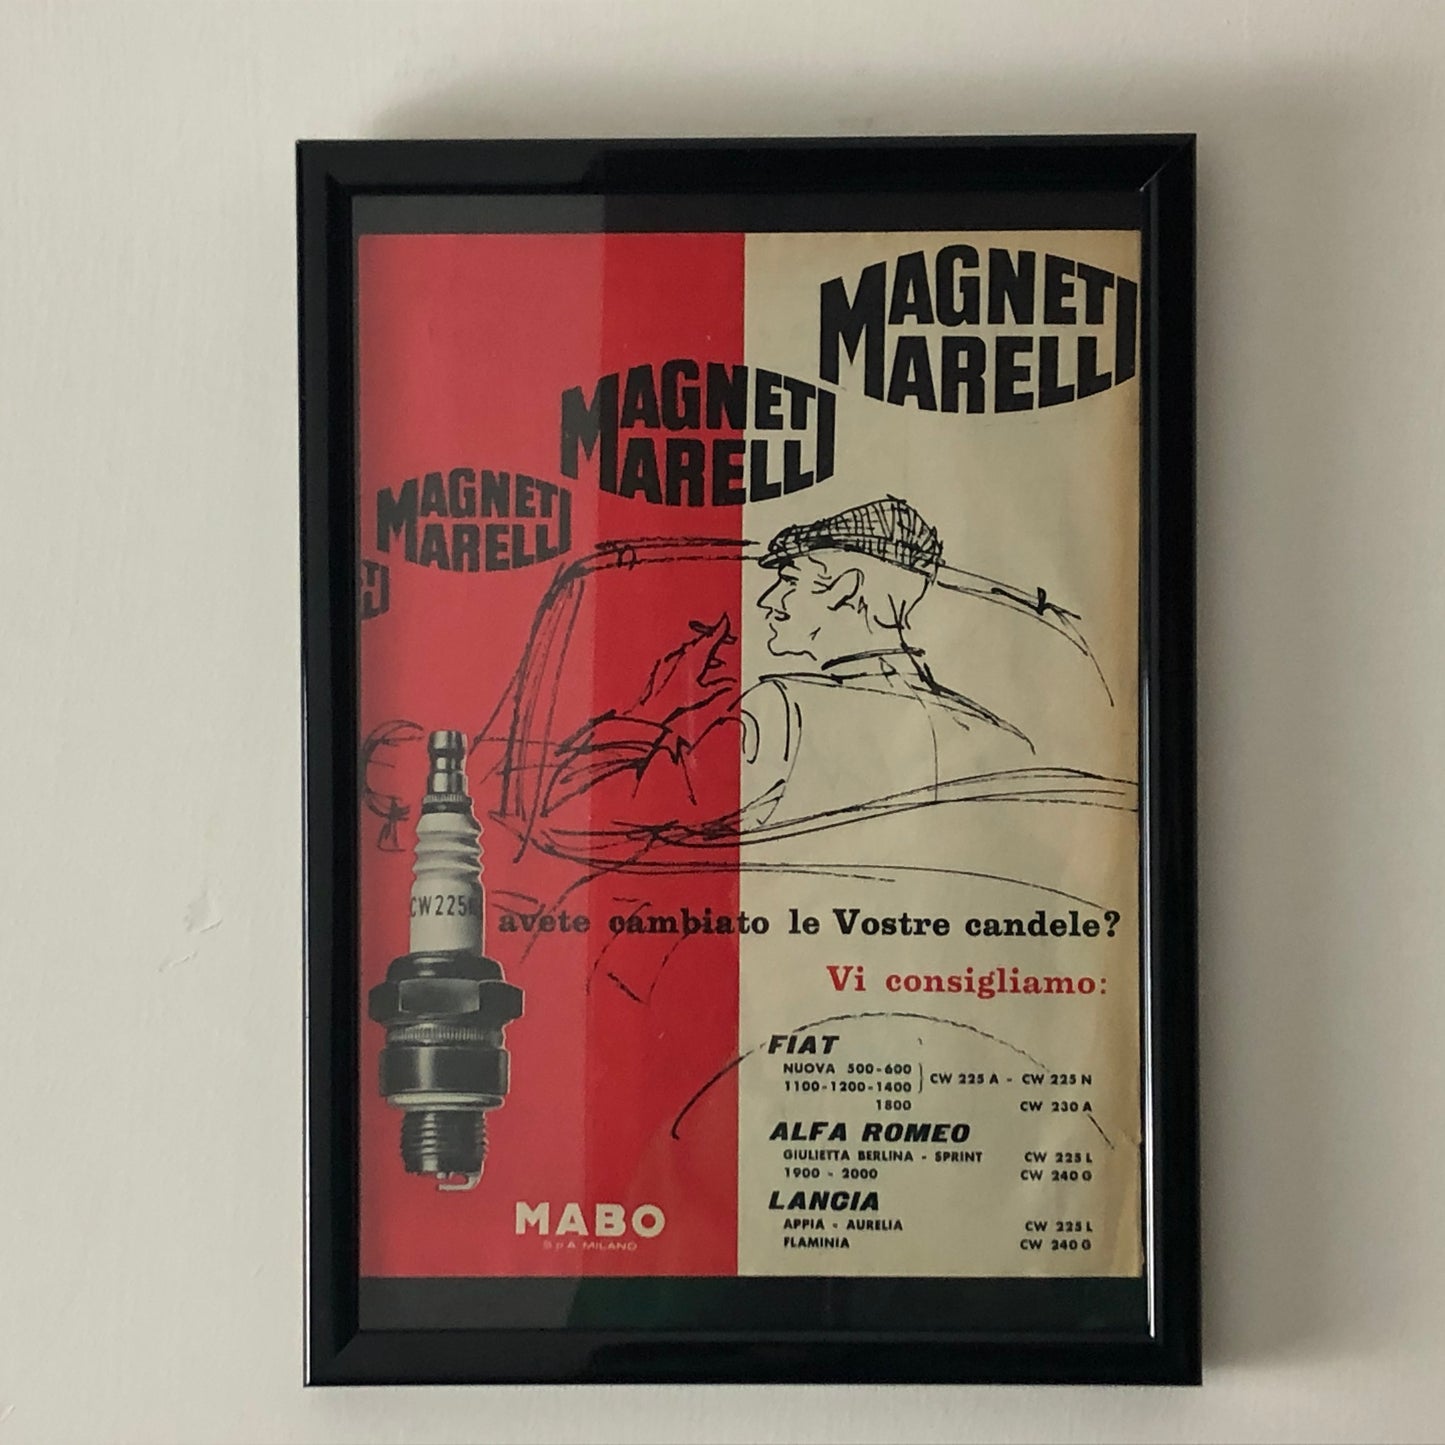 Magneti Marelli, 1959 Advertising Magneti Marelli Spark Plug for FIAT, Alfa Romeo and Lancia